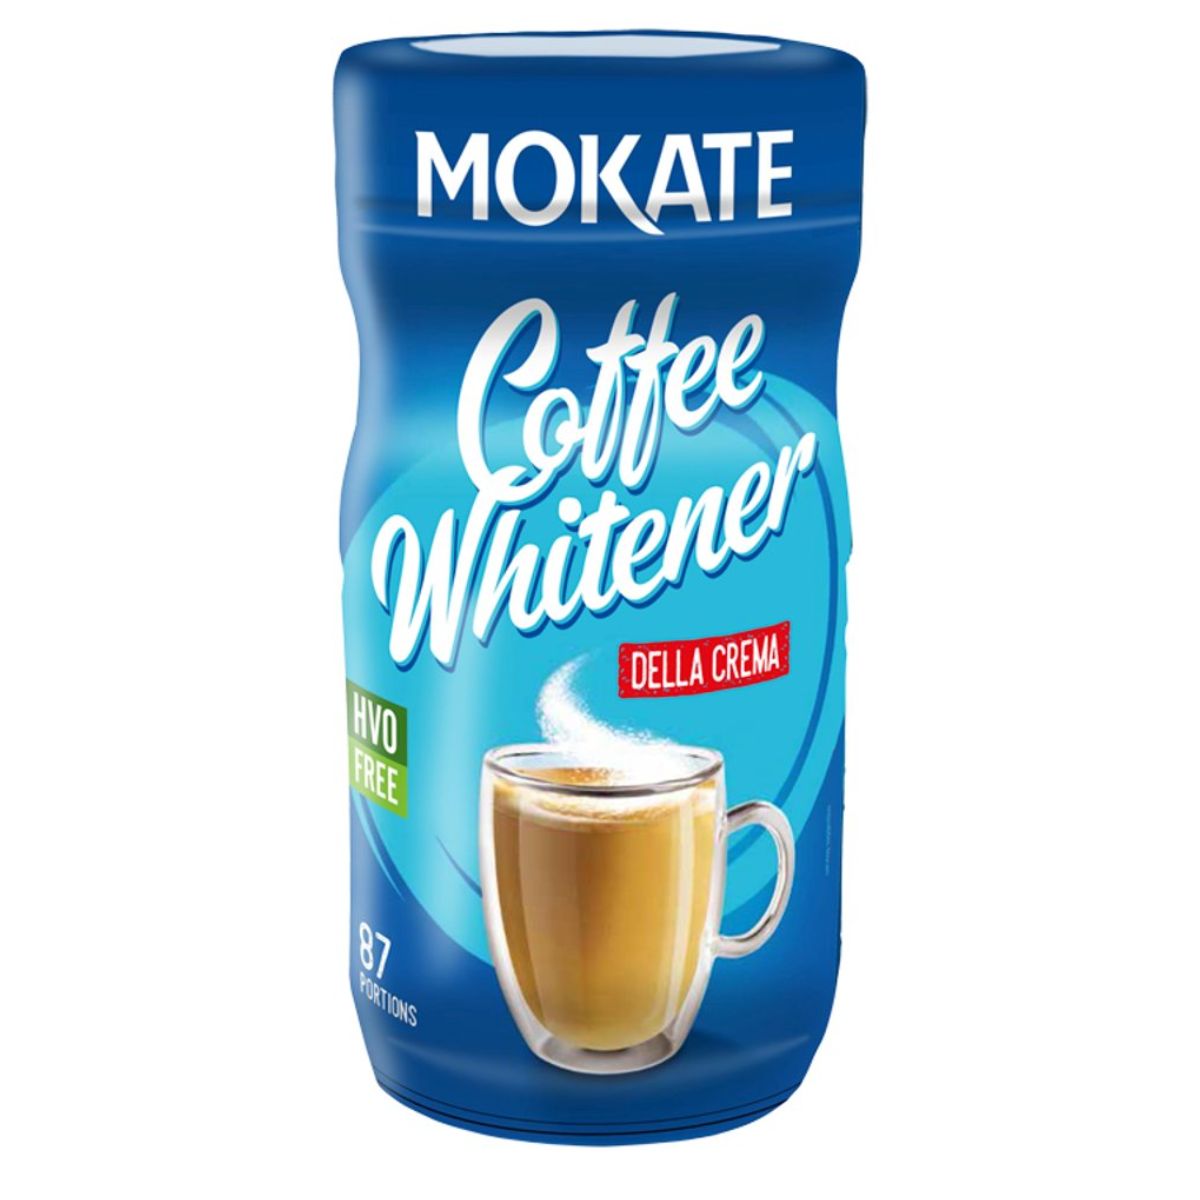 Mokate - Coffee Whitener Standard - 350g - 1 lb.